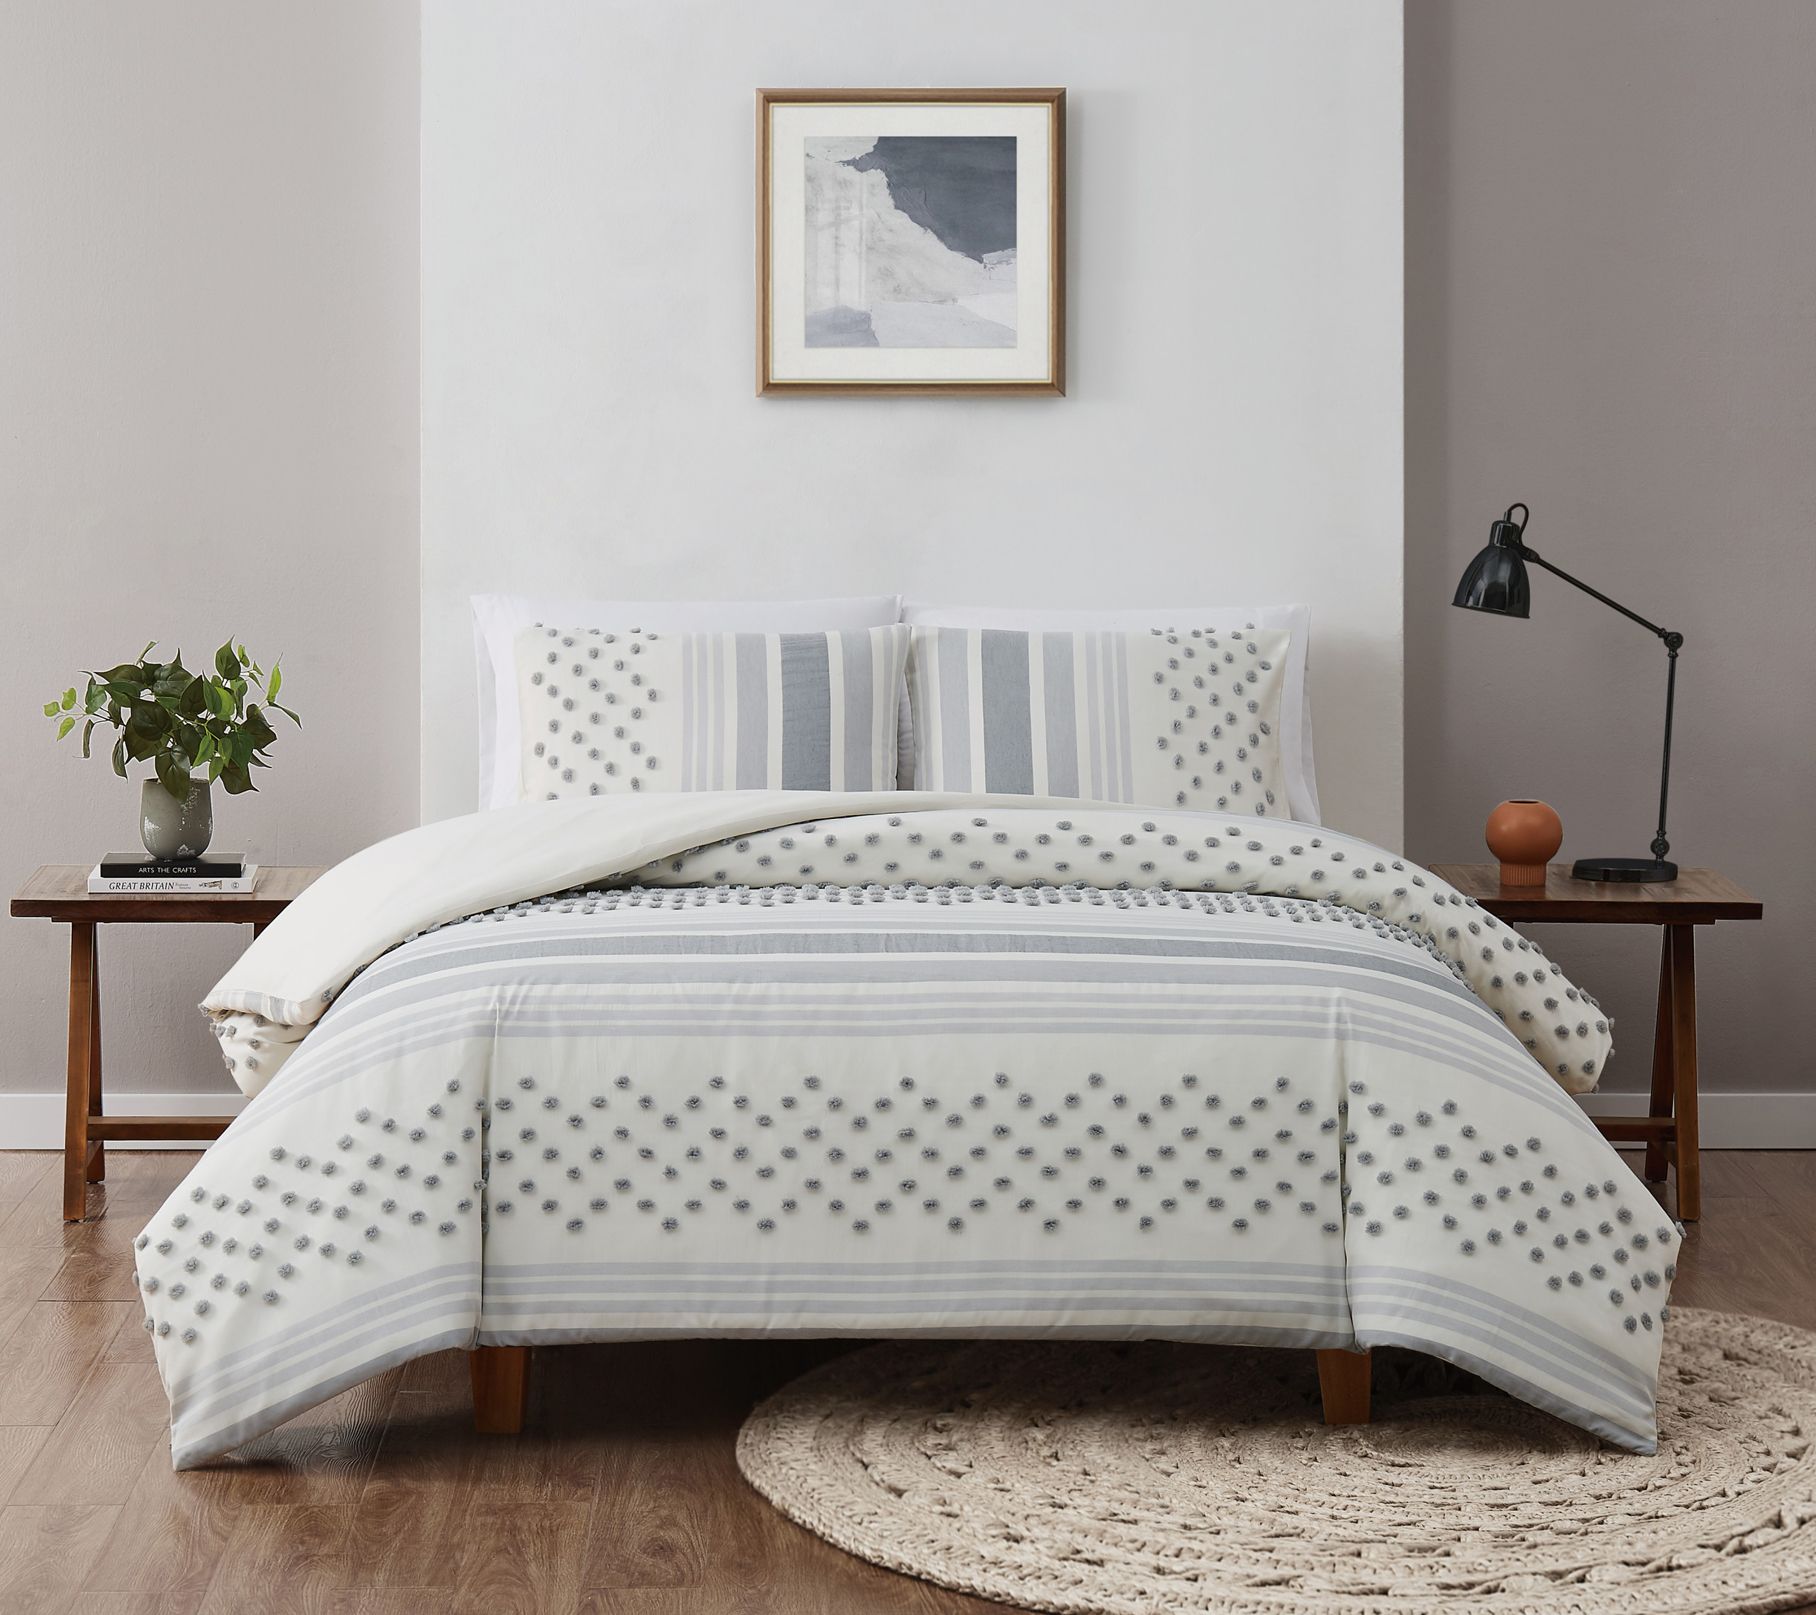 Berkshire Sebastian Plaid Cozy Reversible Comforter Set Queen 